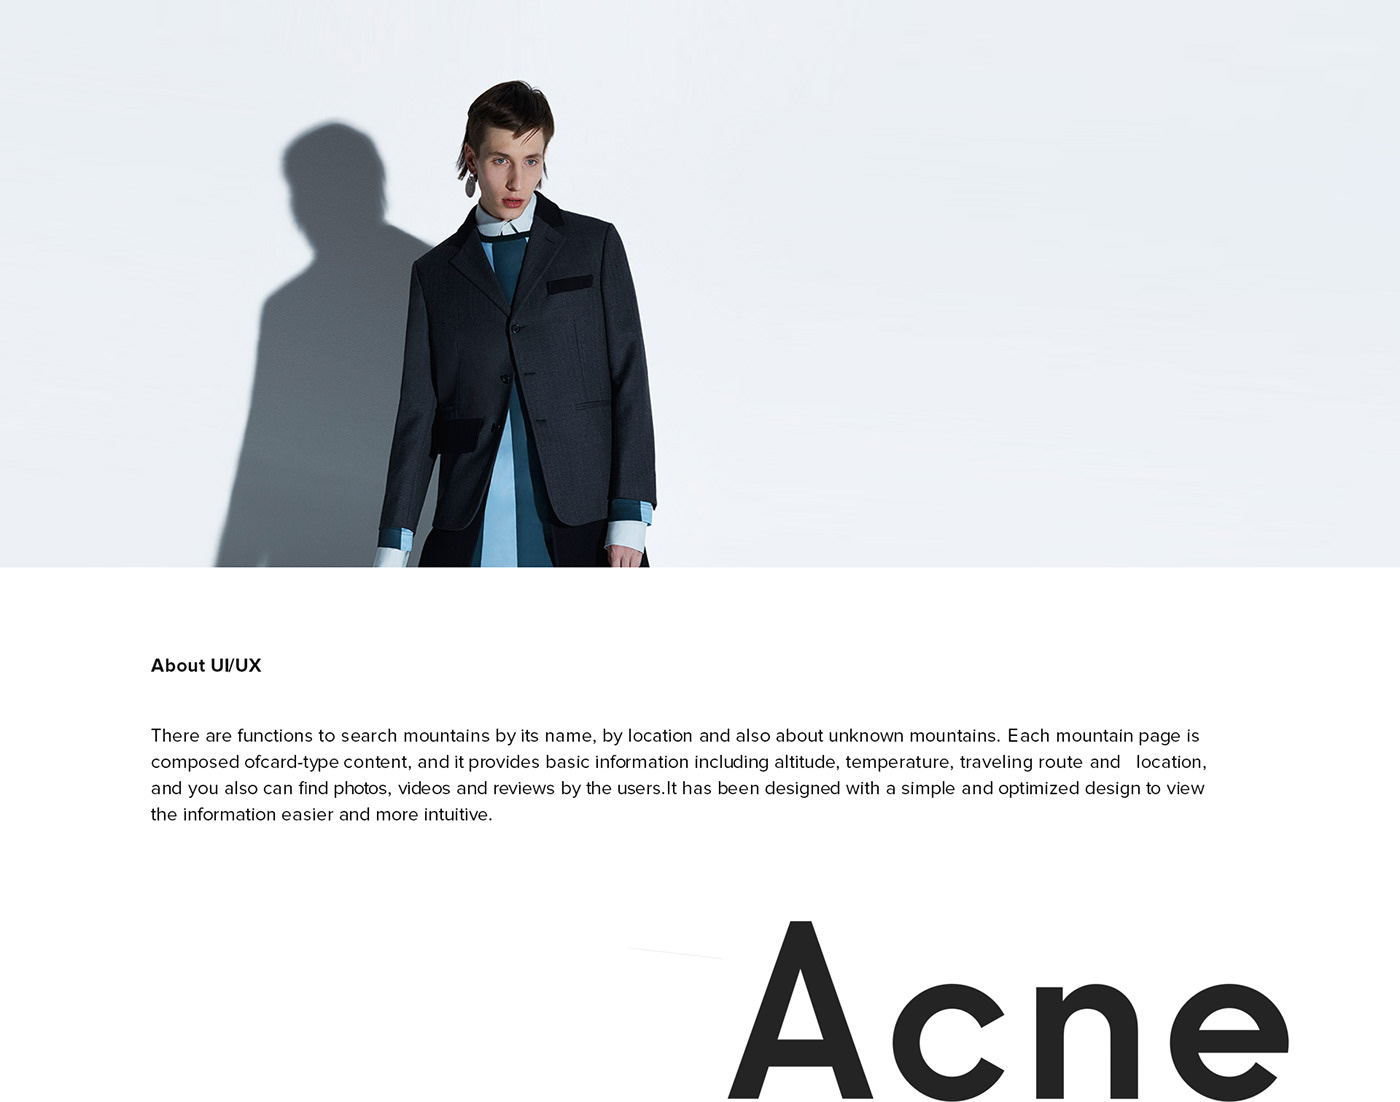 acne Acne Studios interaction Stockholm Clothing a.p.c modern minimal farfetch   Maison Margiela